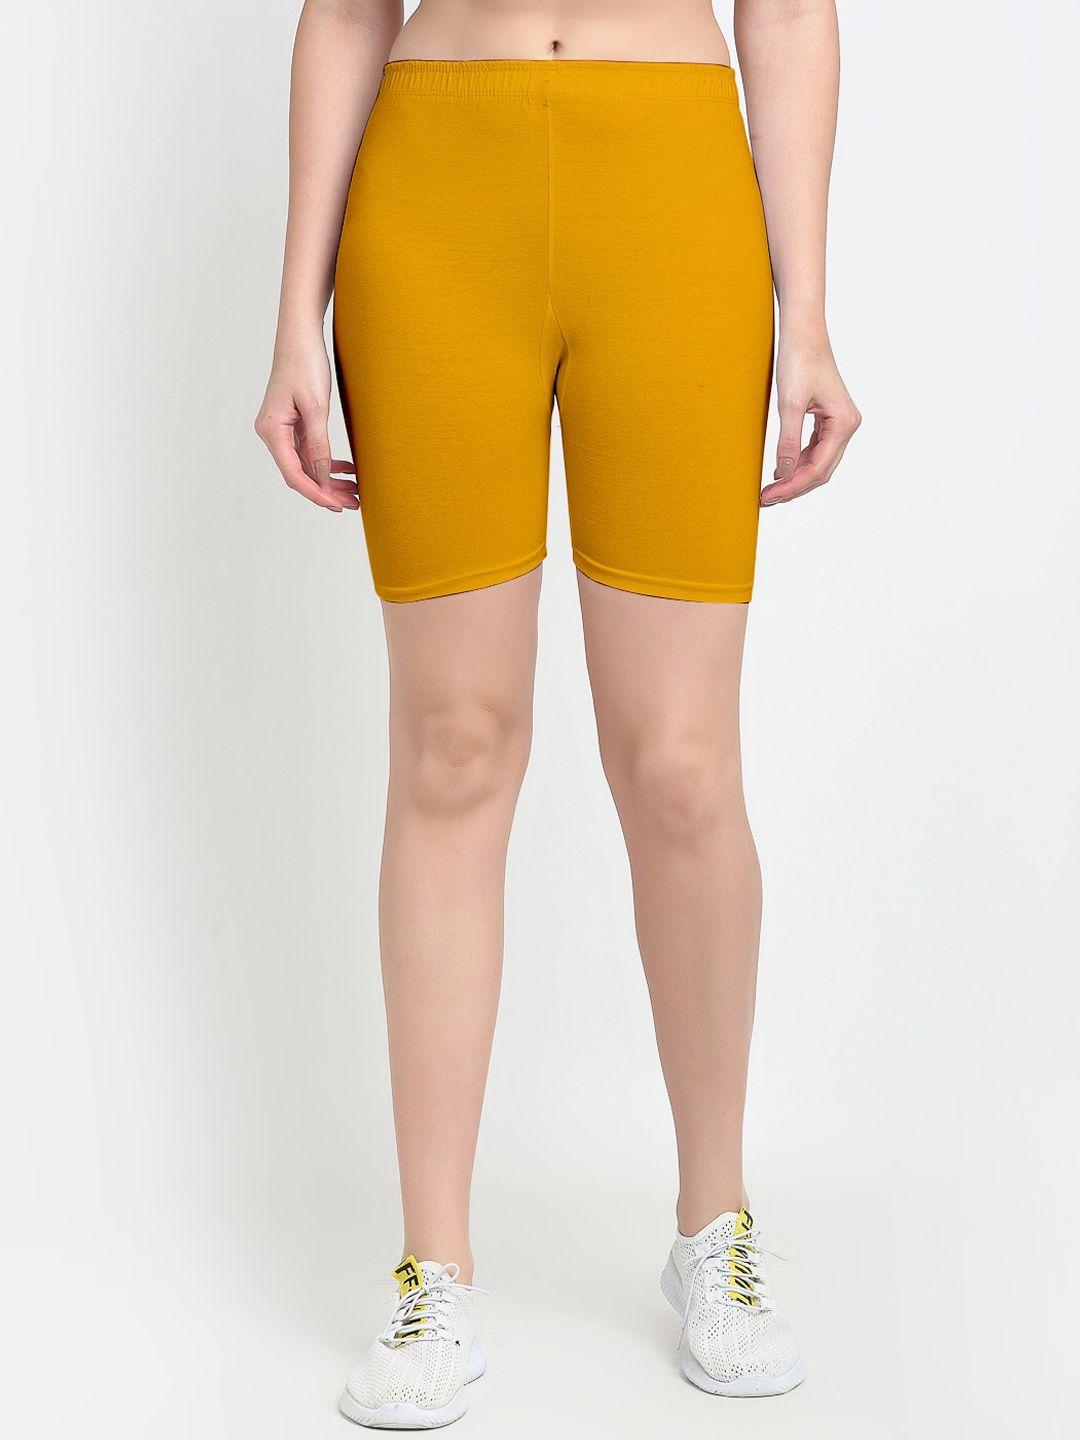 gracit women mustard yellow biker shorts